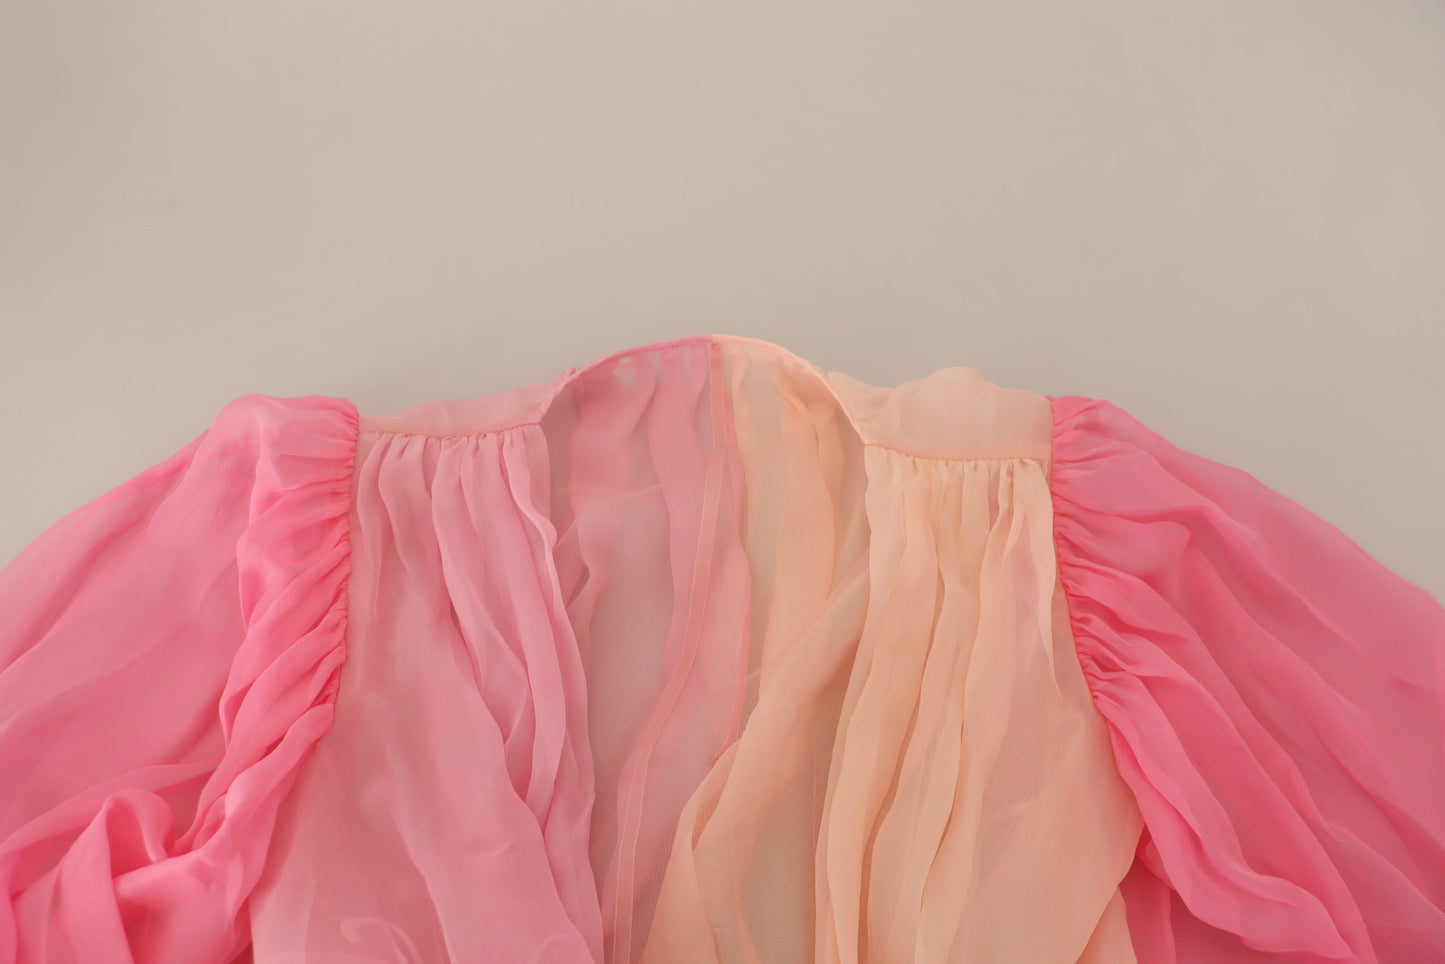 Silk V-Neckline Wrap Blouse in Pink